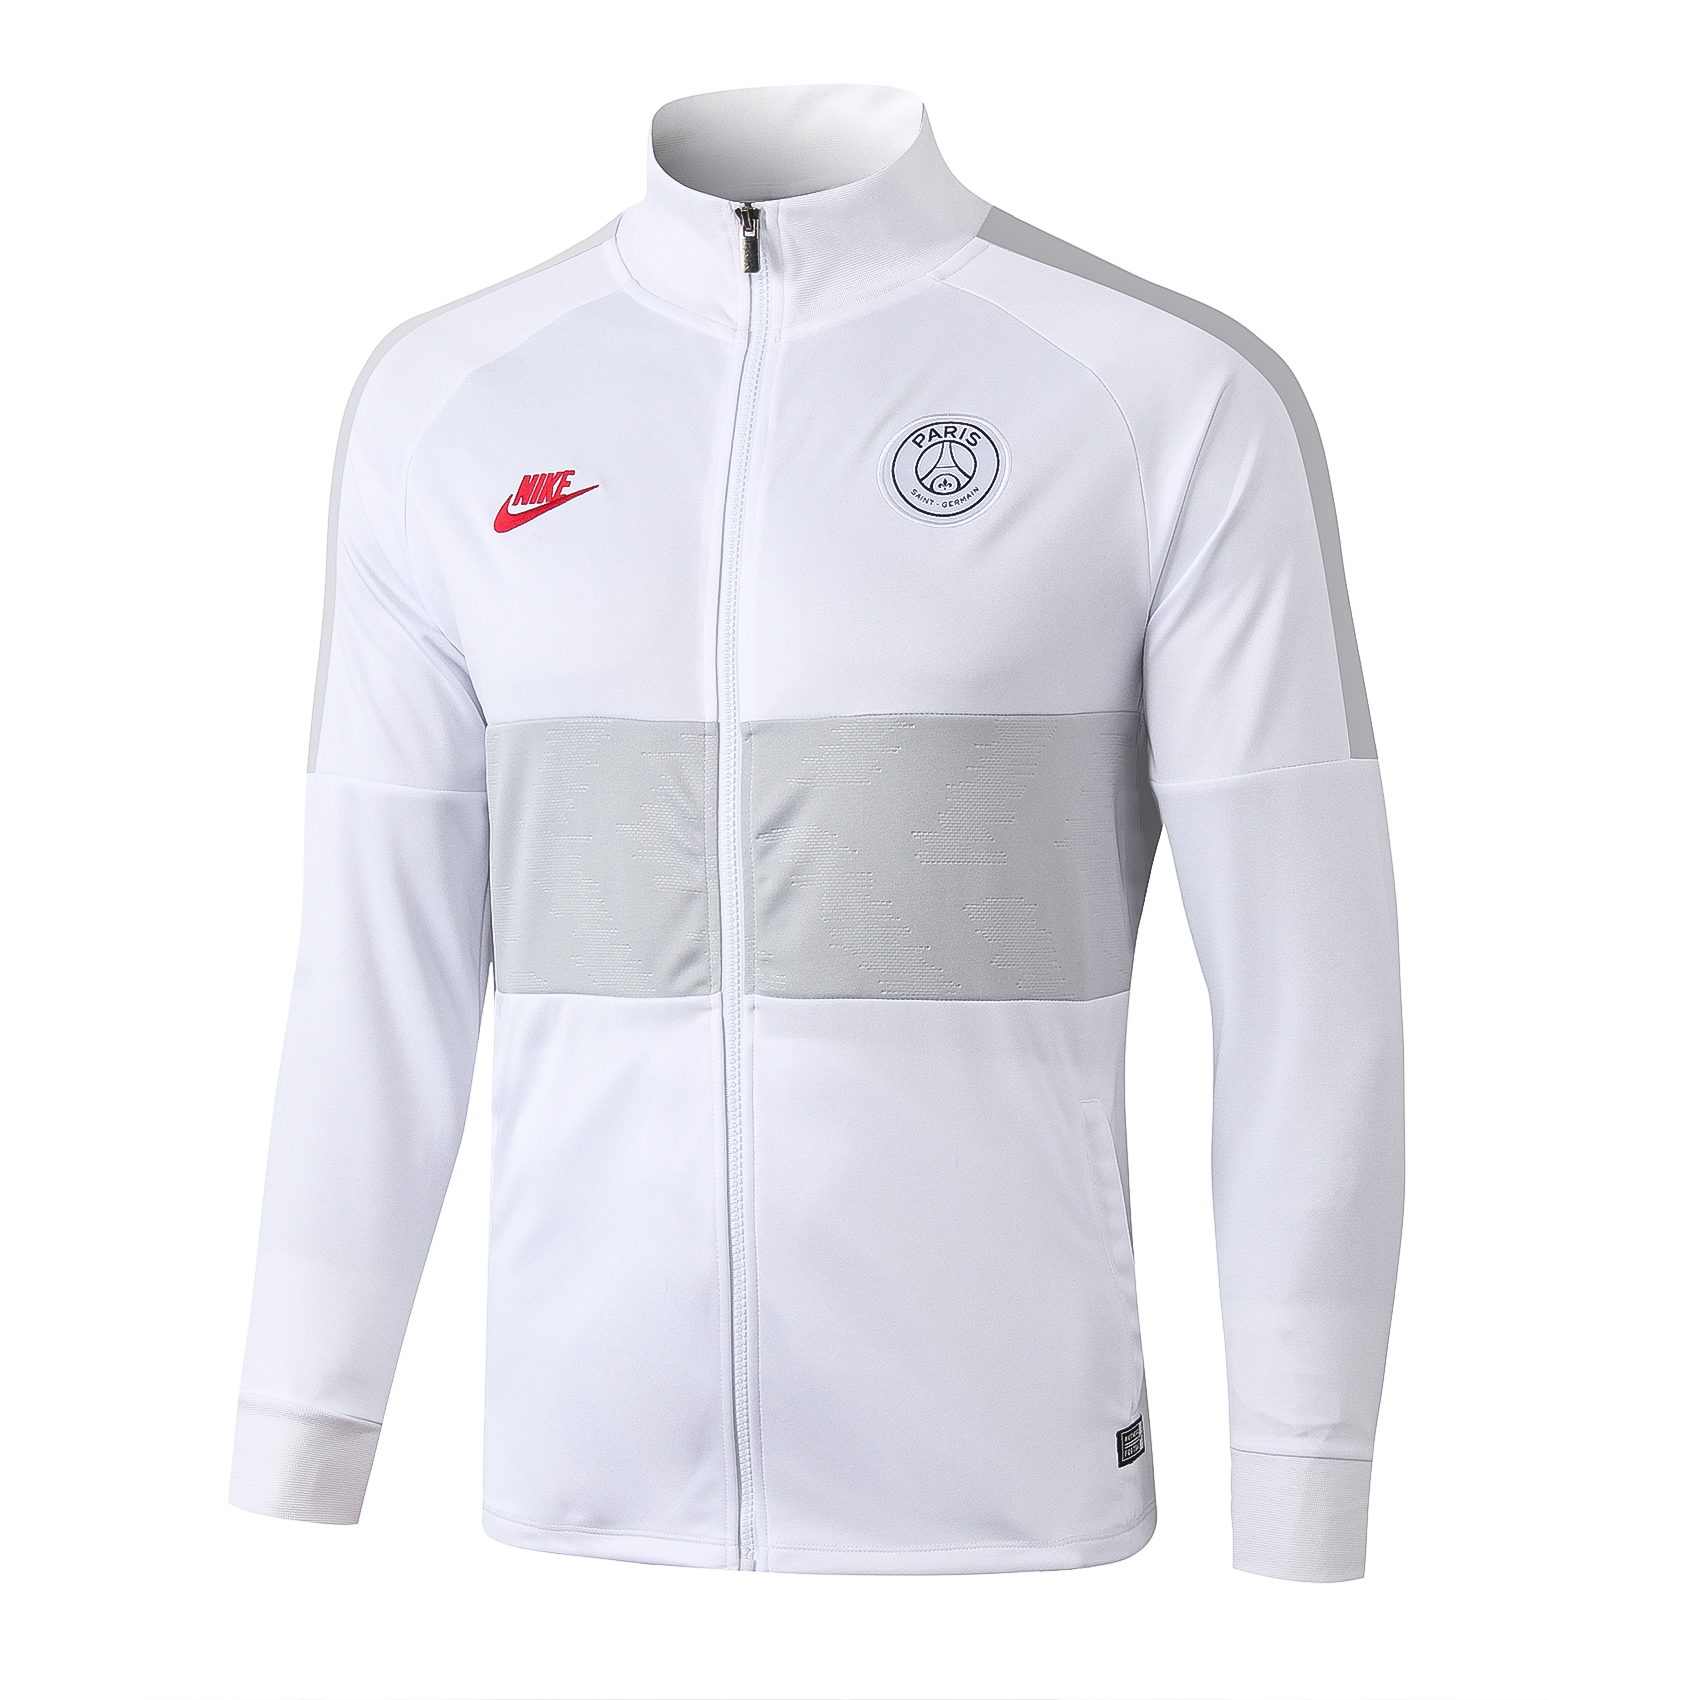 psg white jersey 2019